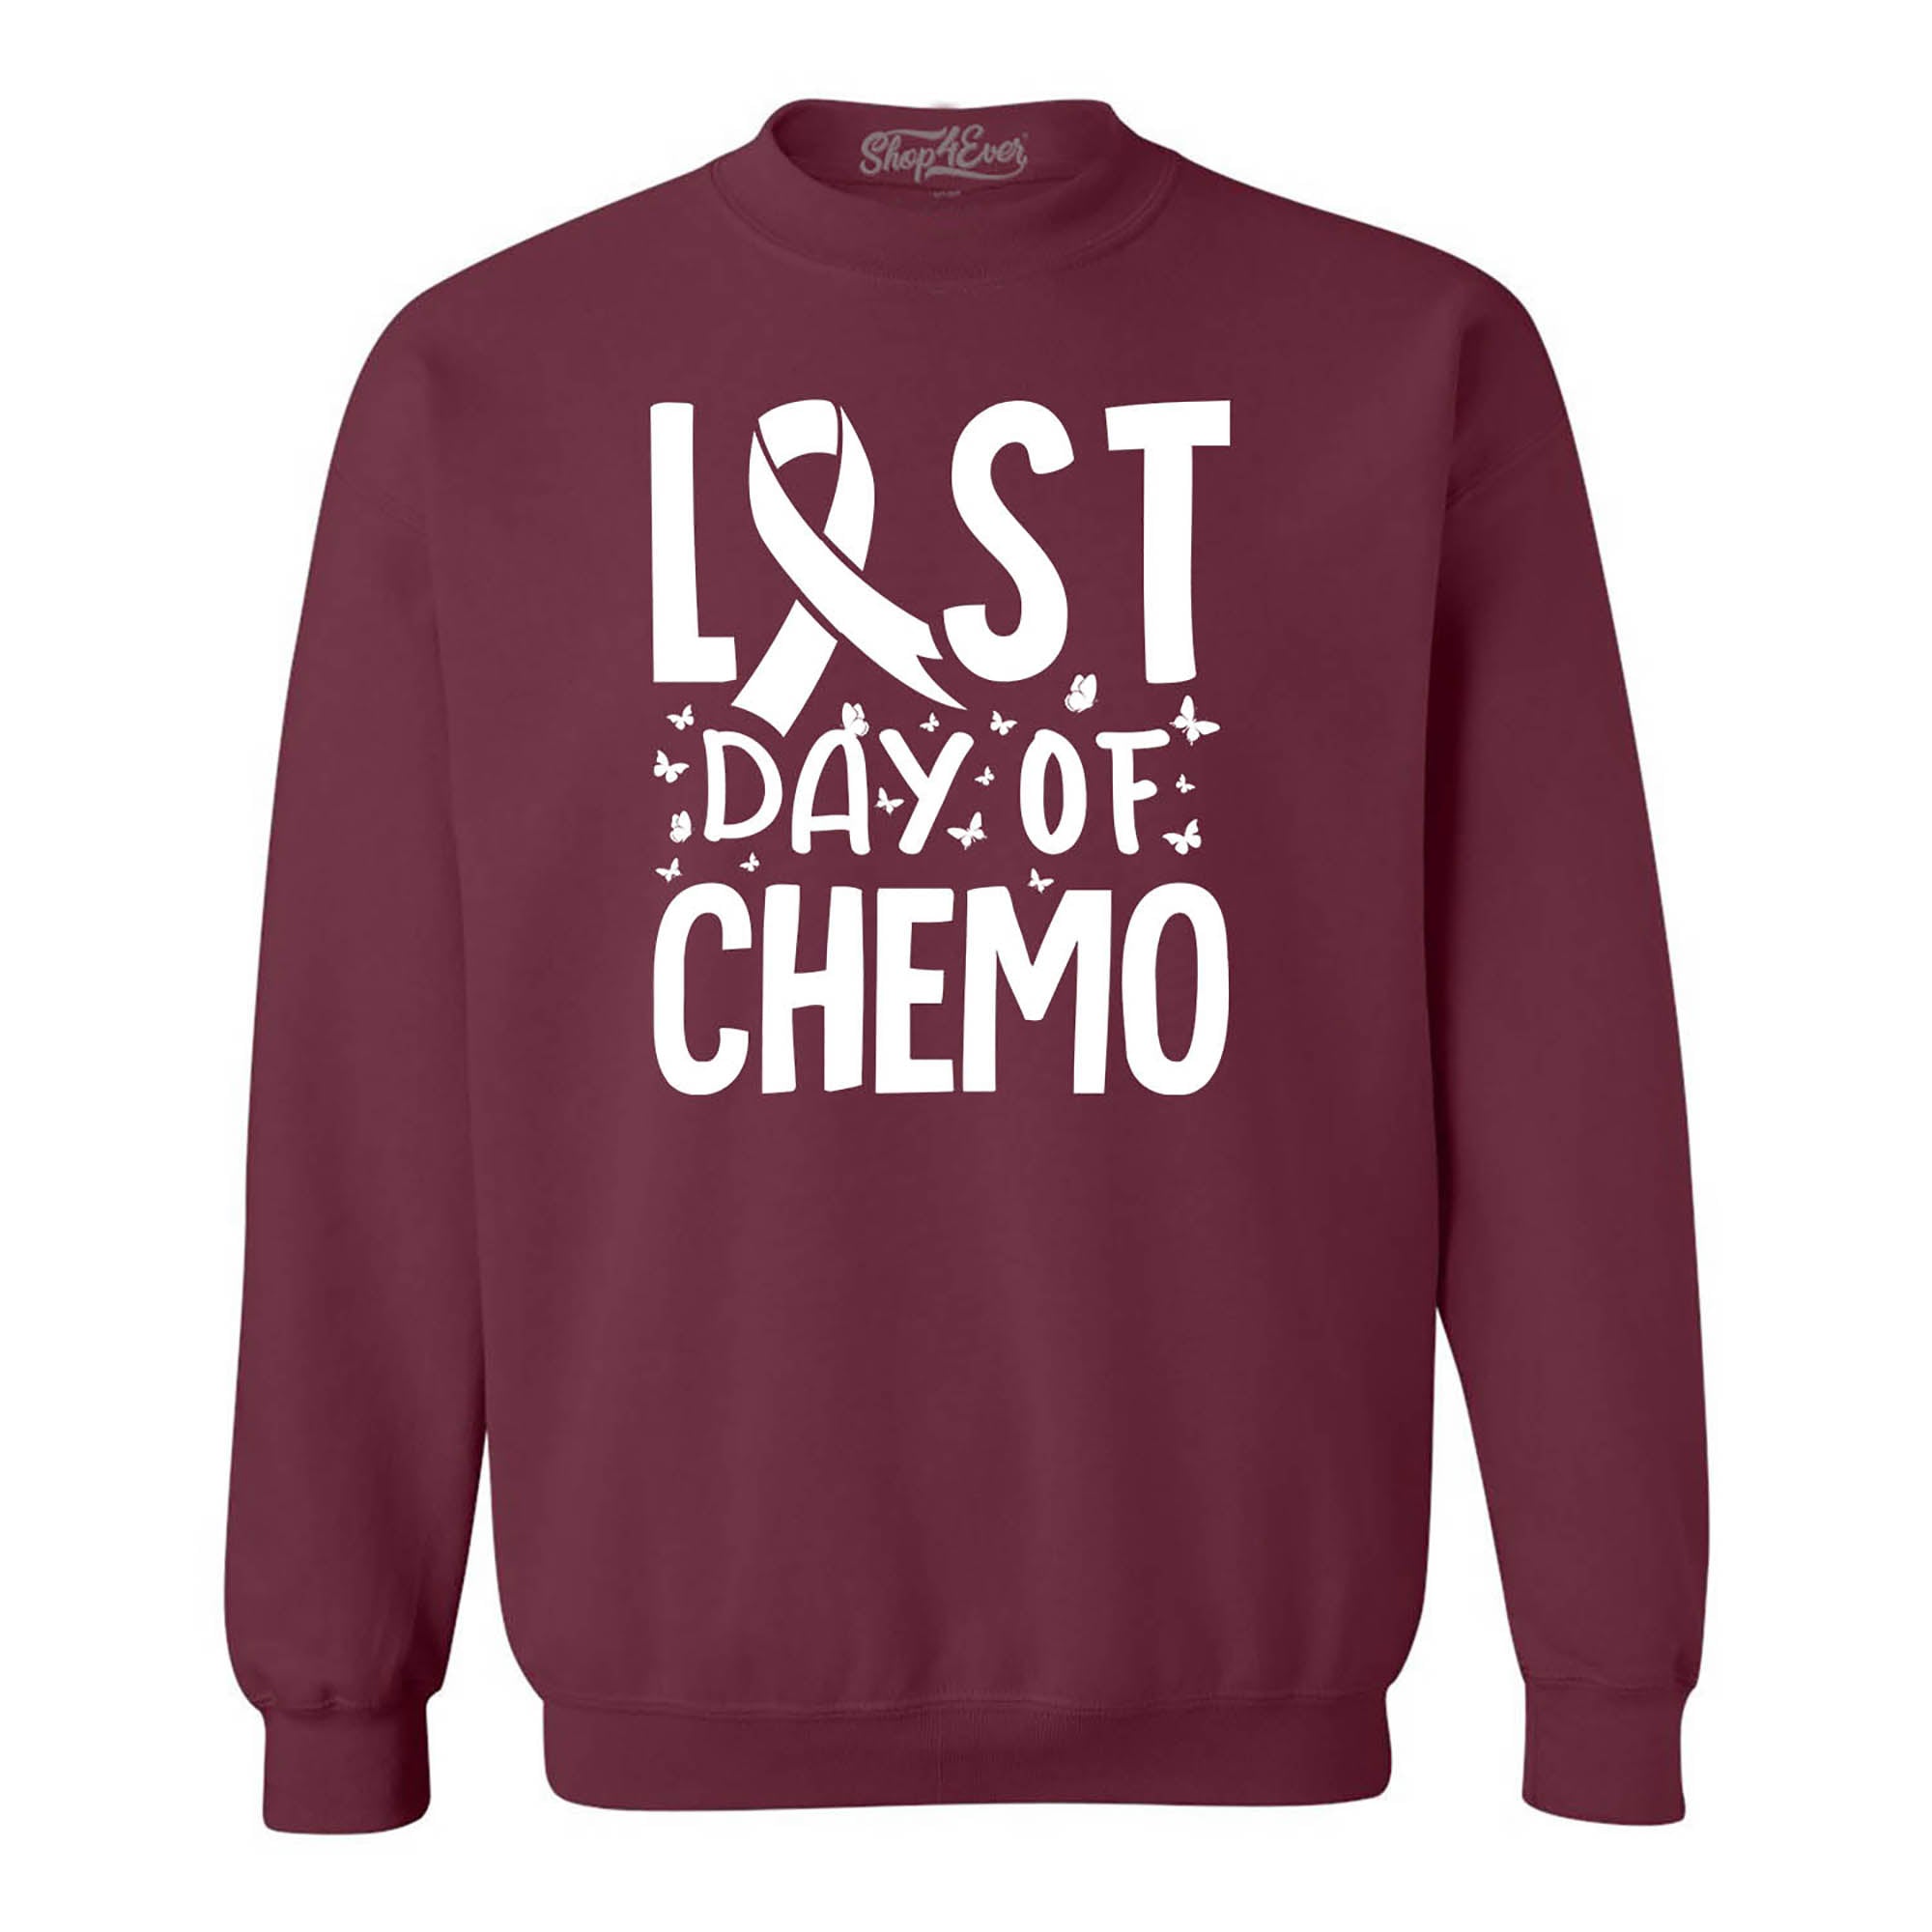 Last Day of Chemo Celebrate Cancer Survivor Crewneck Sweatshirts